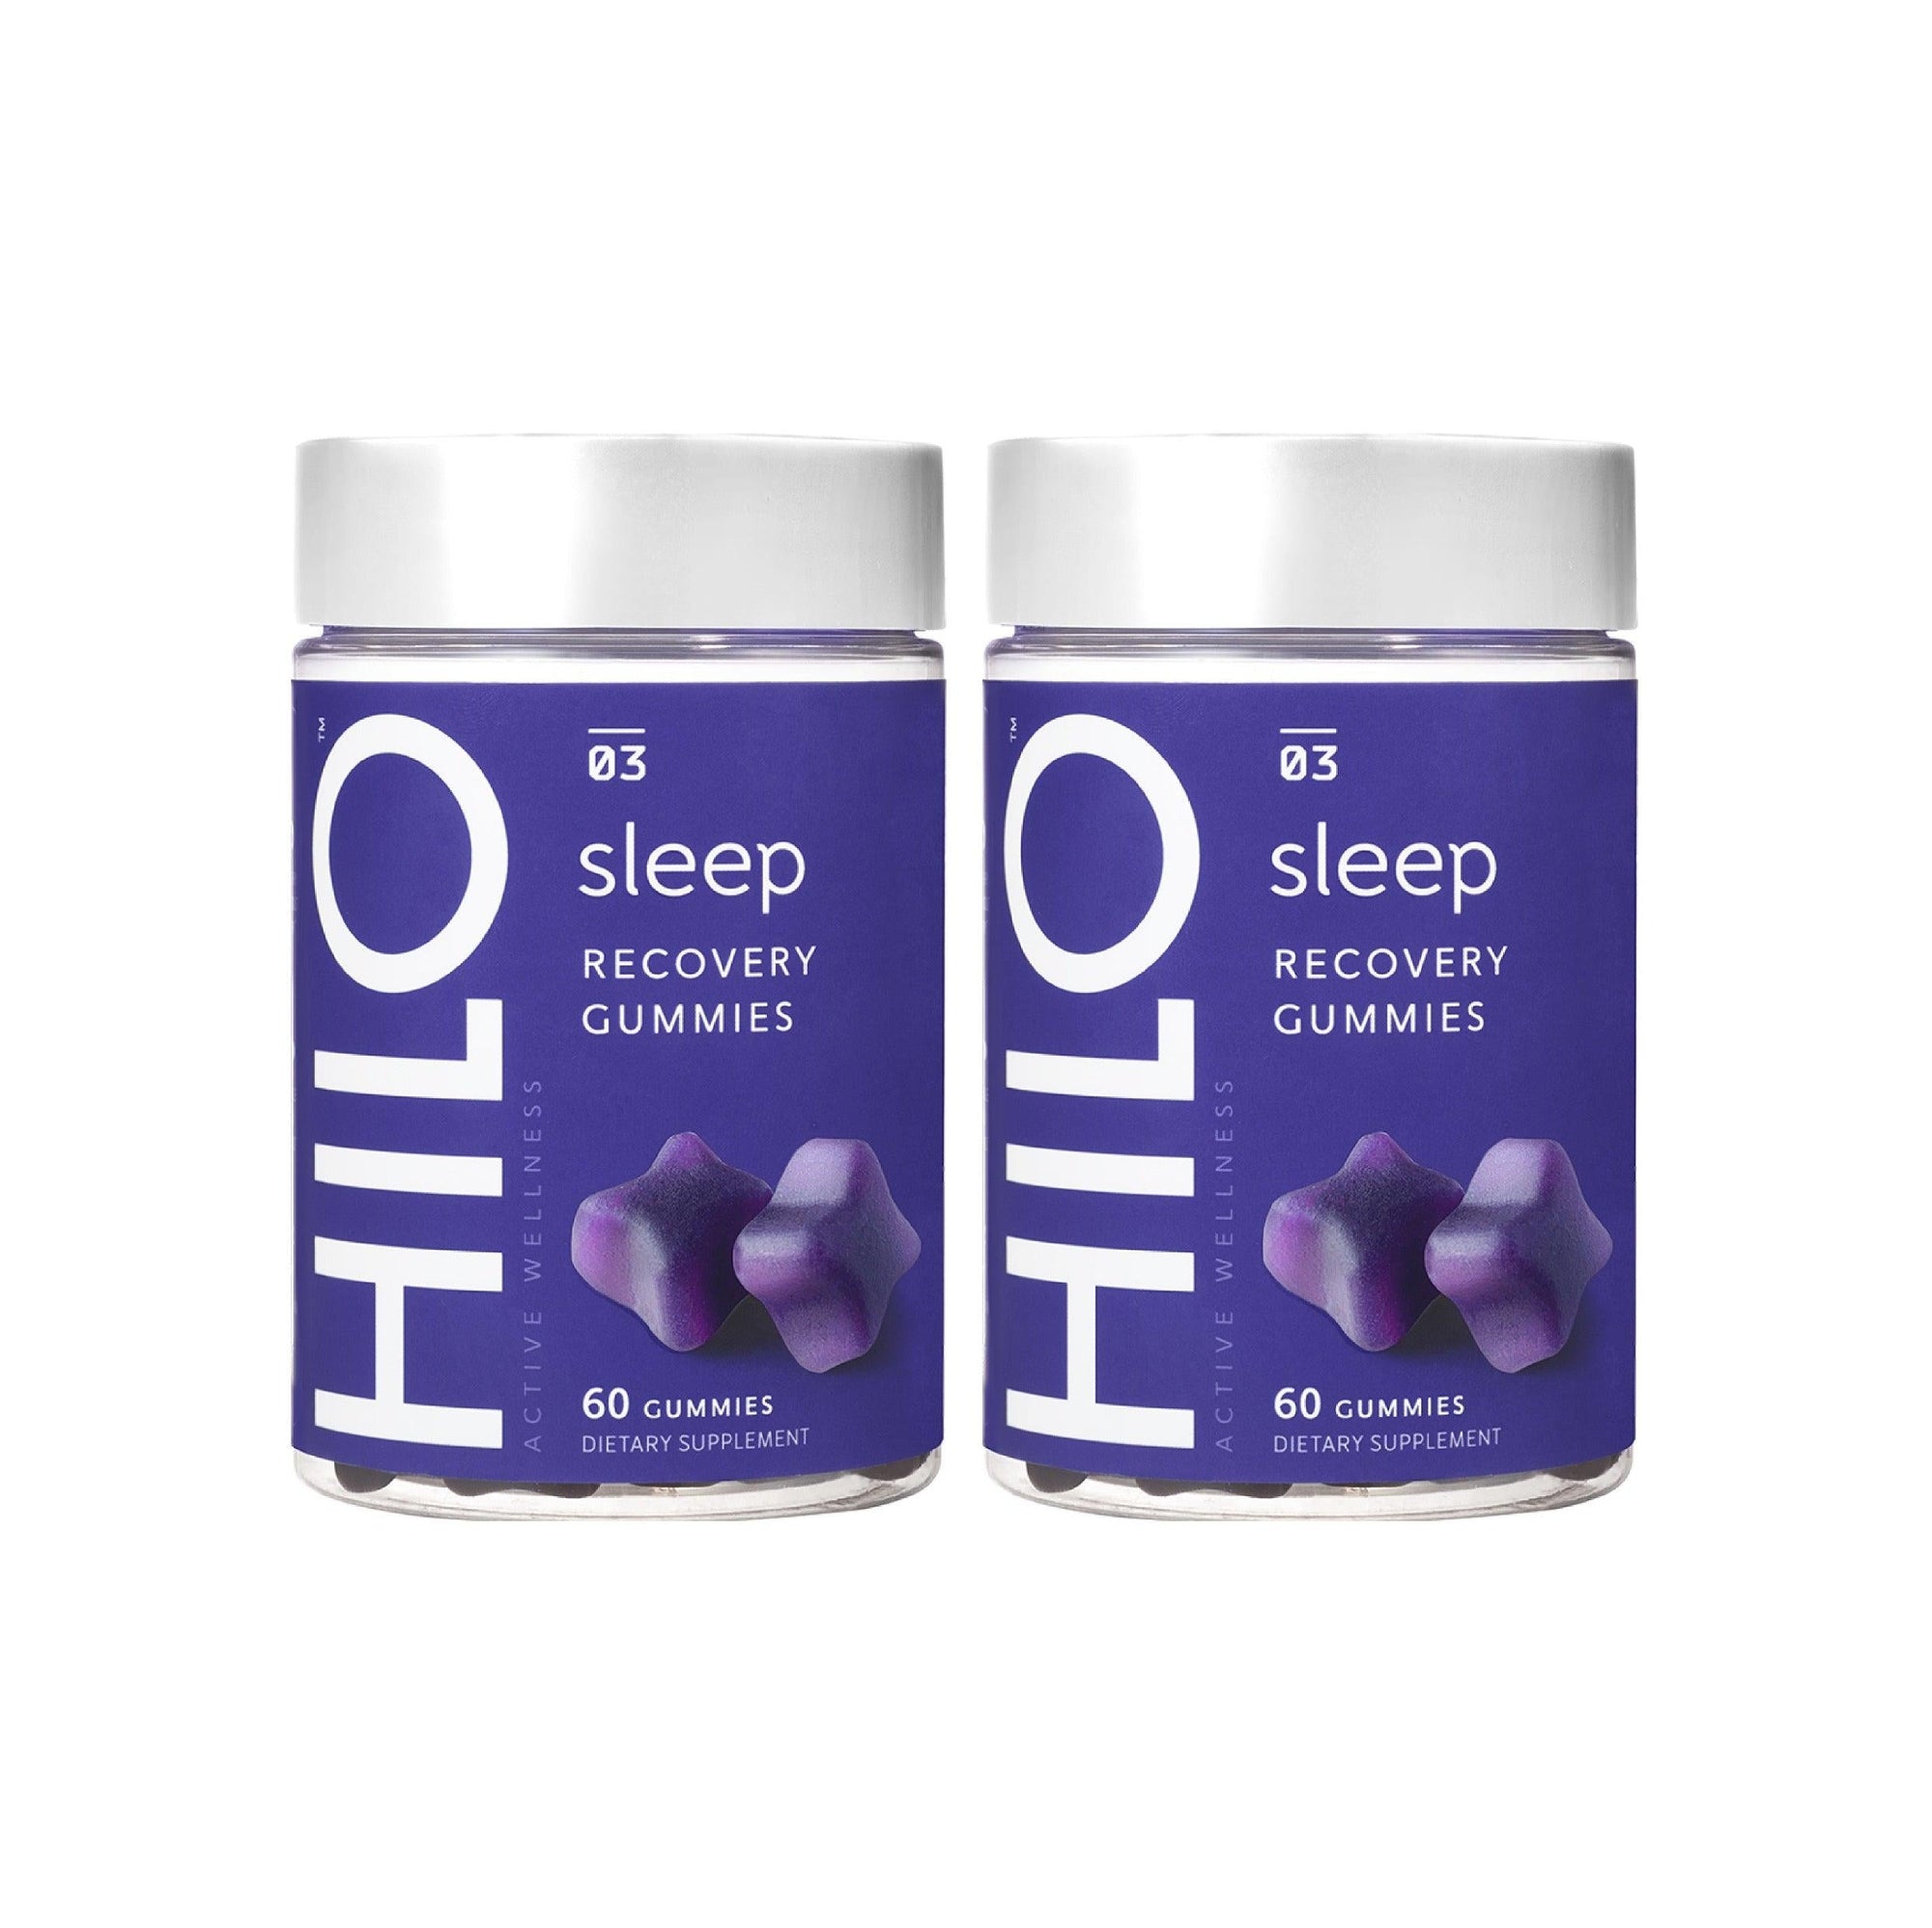 SLEEP DREAMS PACK - Hilo Nutrition